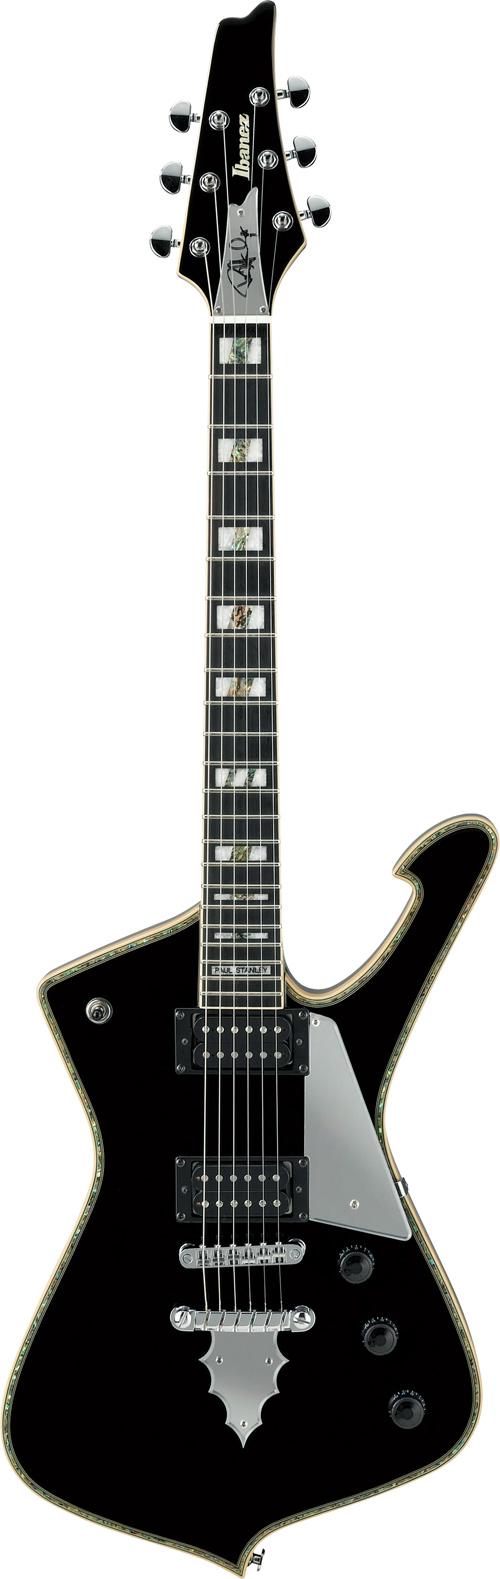 Ibañez - Guitarra Eléctrica Paul Stanley con Funda, Color: Negra Mod.PS120-BK_95